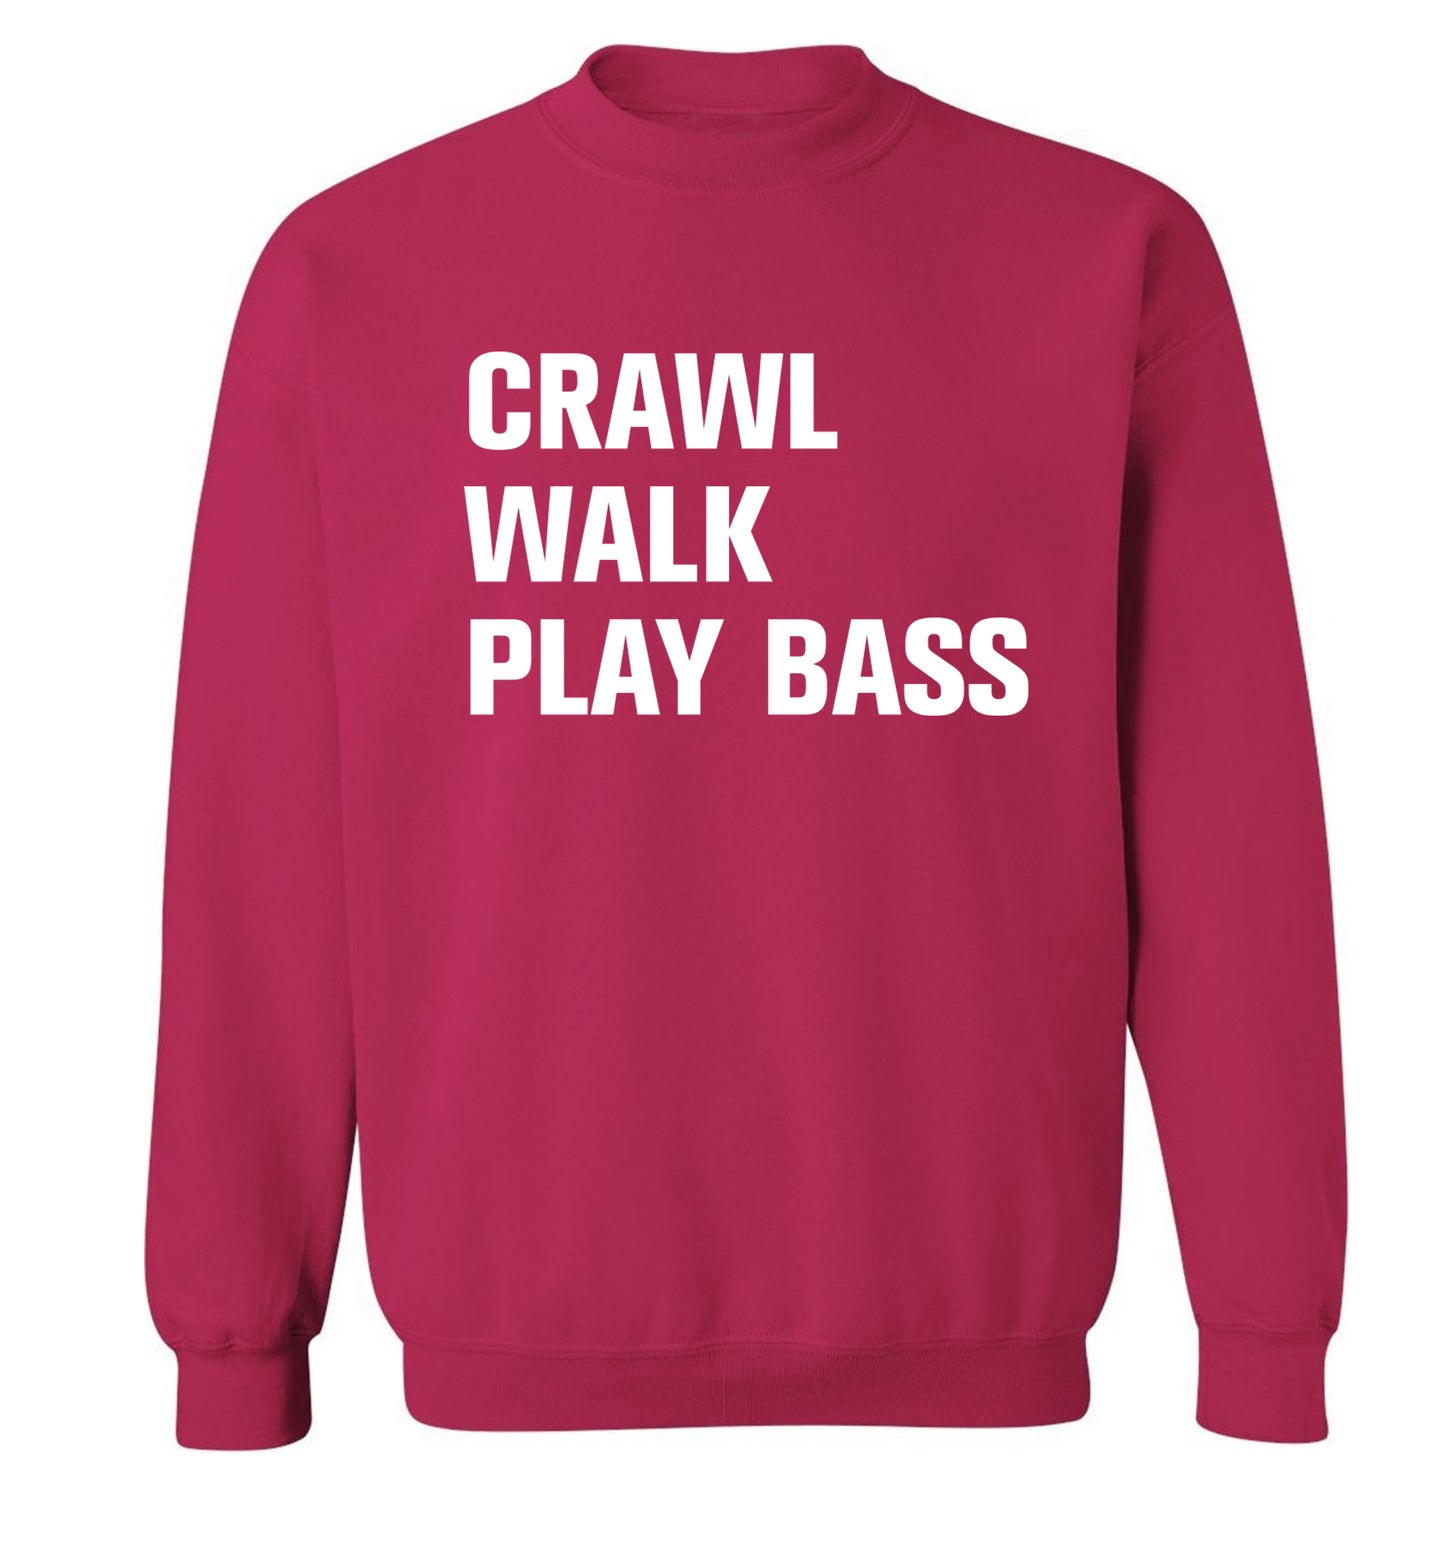 Crawl Walk Play Bass Adult's unisex pink Sweater 2XL